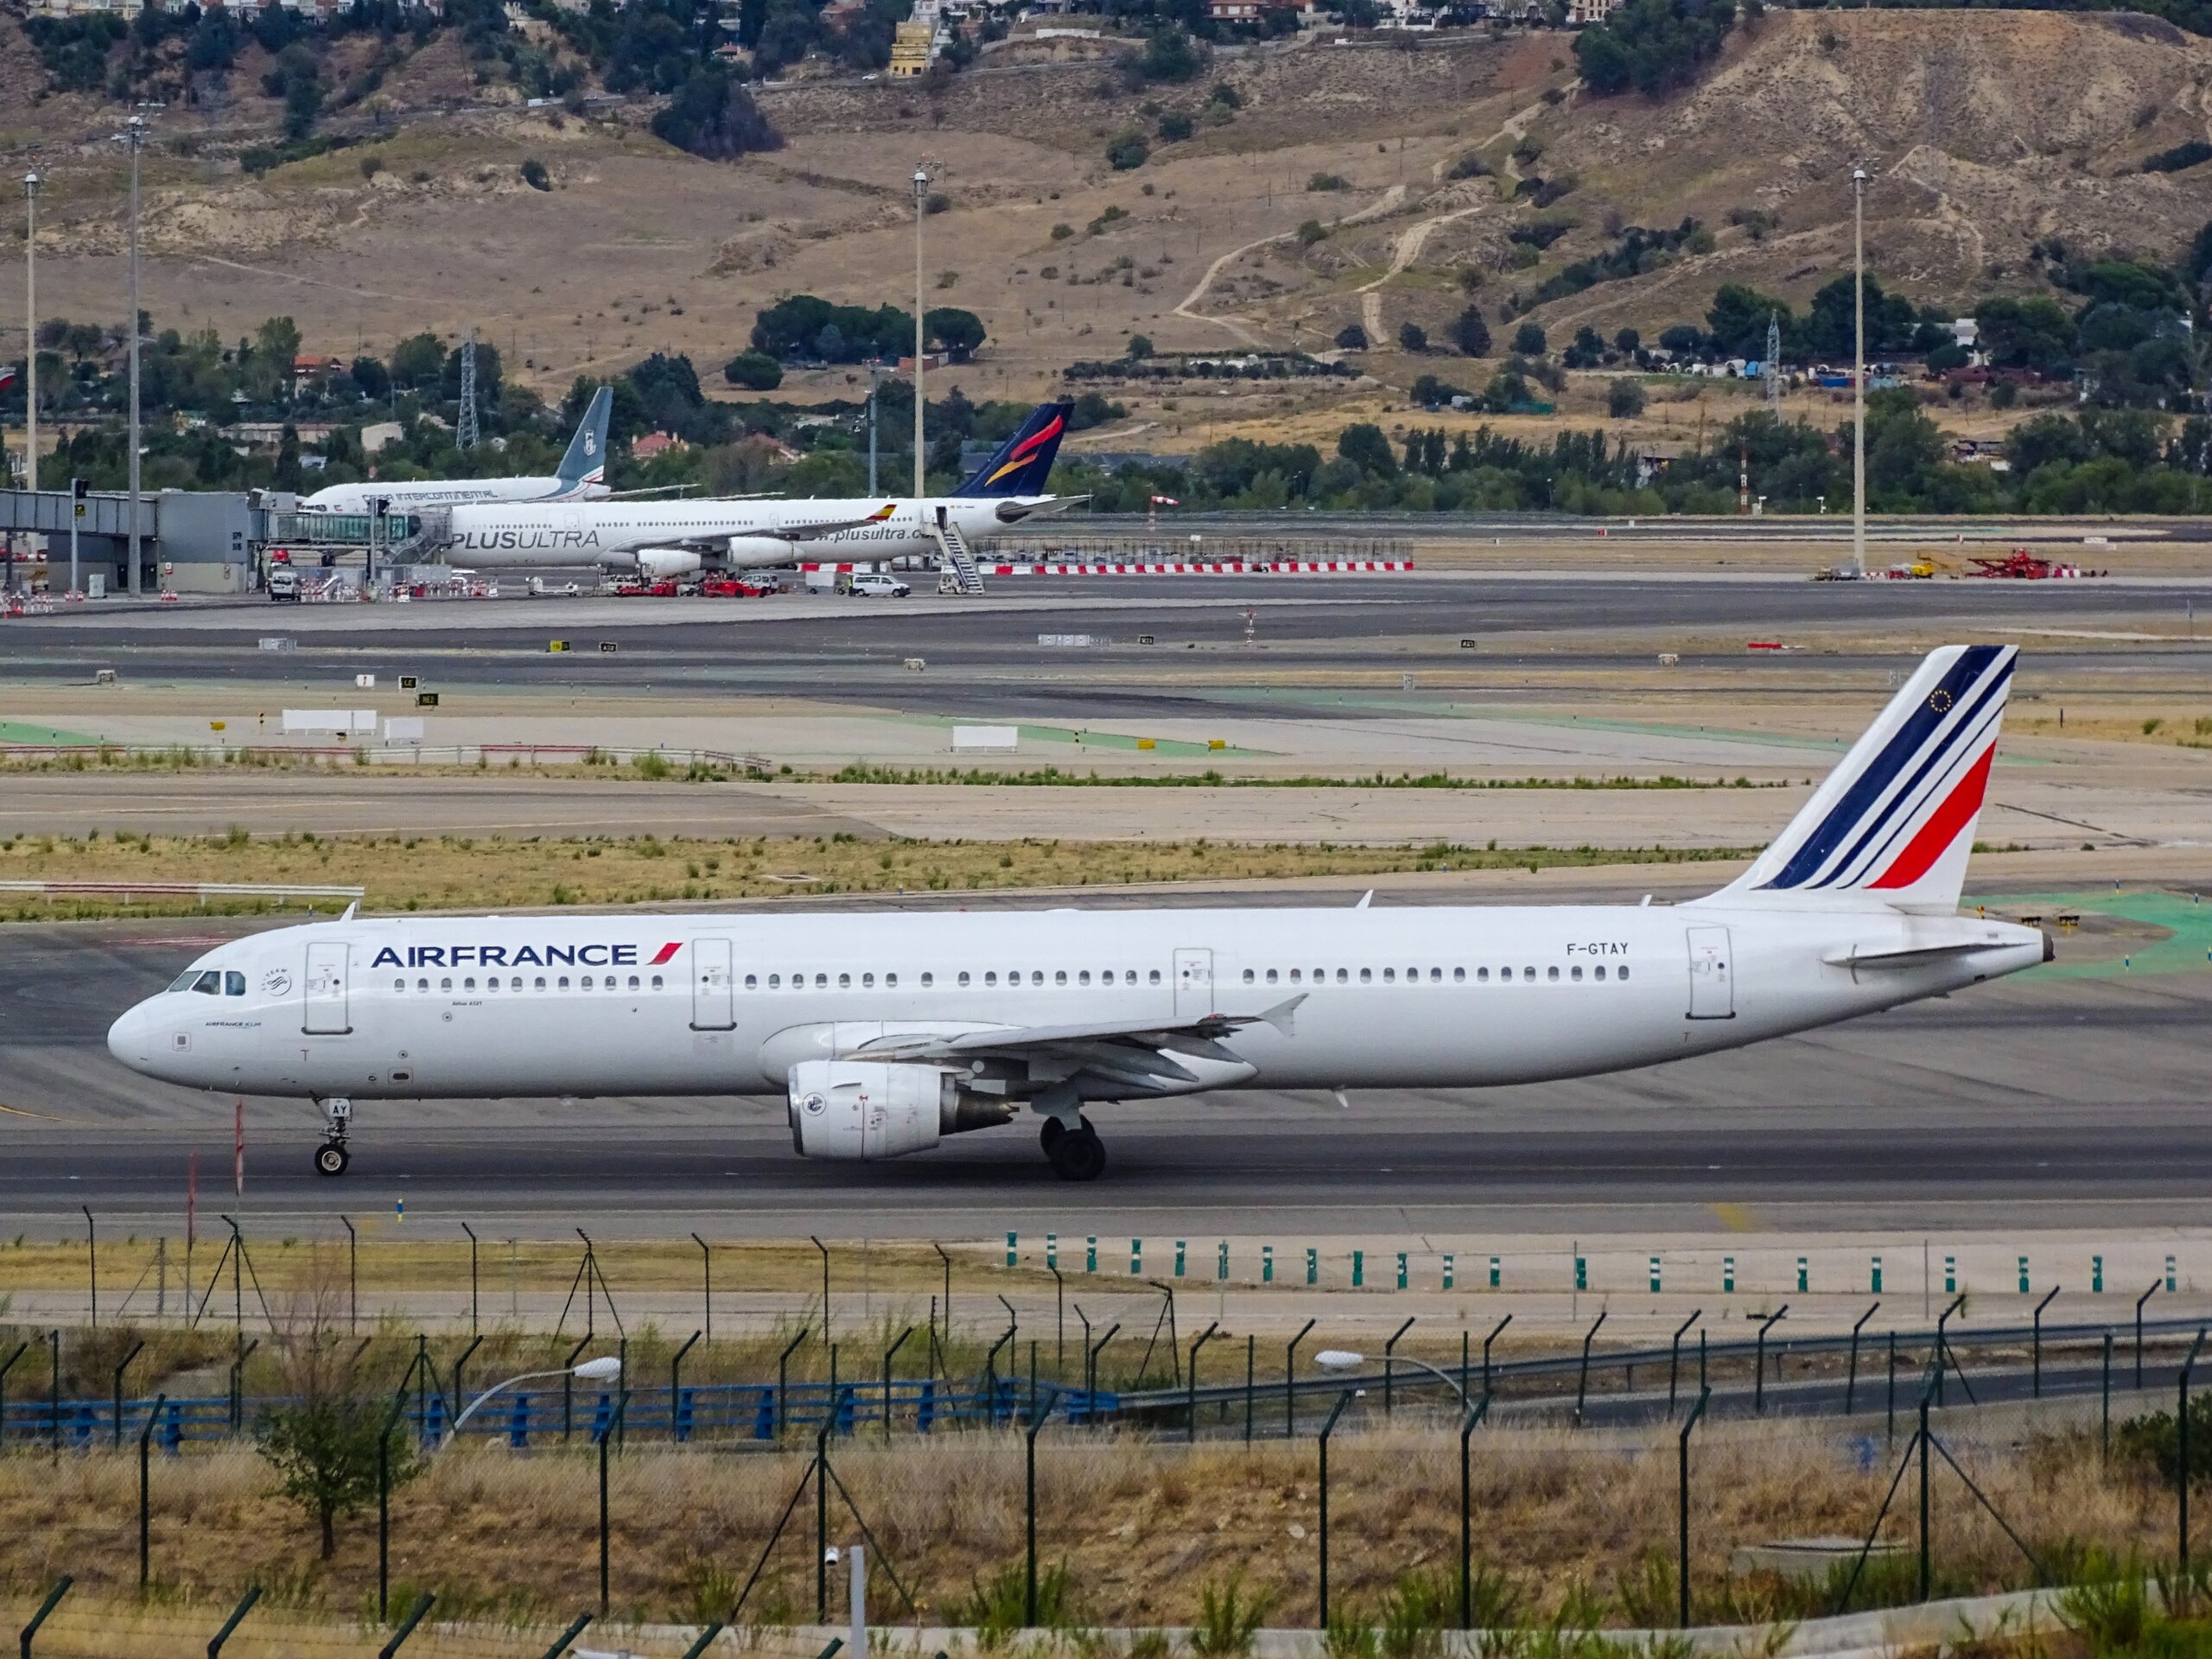 Air France plane on runway